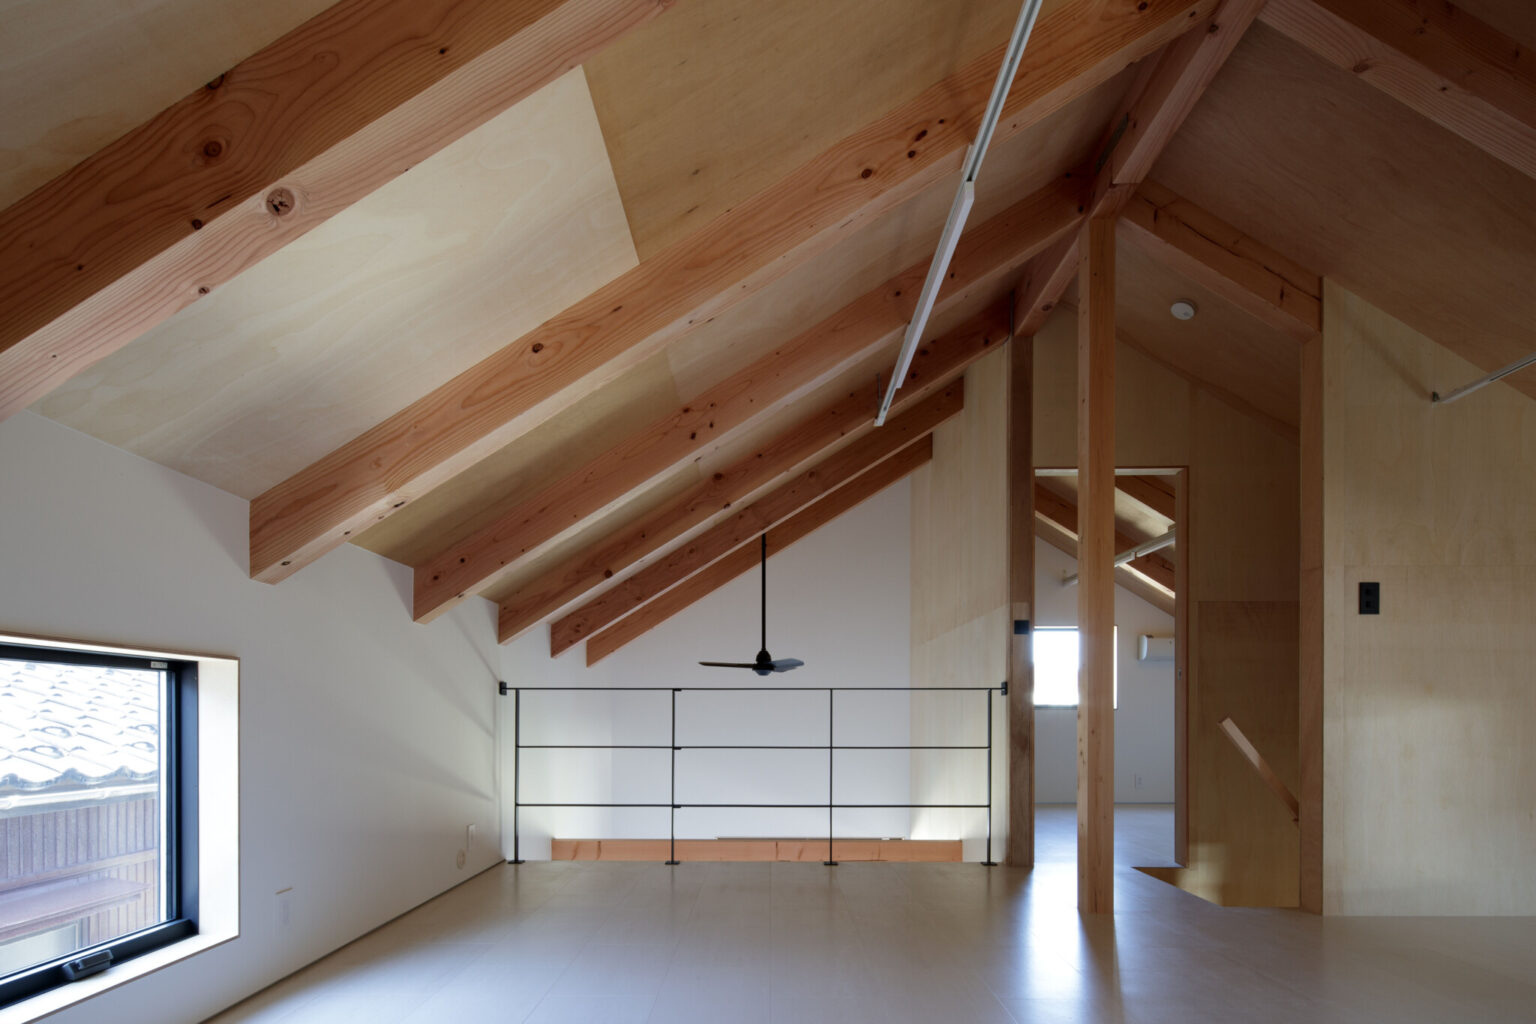 Hut House designed by MOSAIC DESIGN Inc. Ko Nakamura and Sachiyo Hirosawa 住宅 富山 小屋